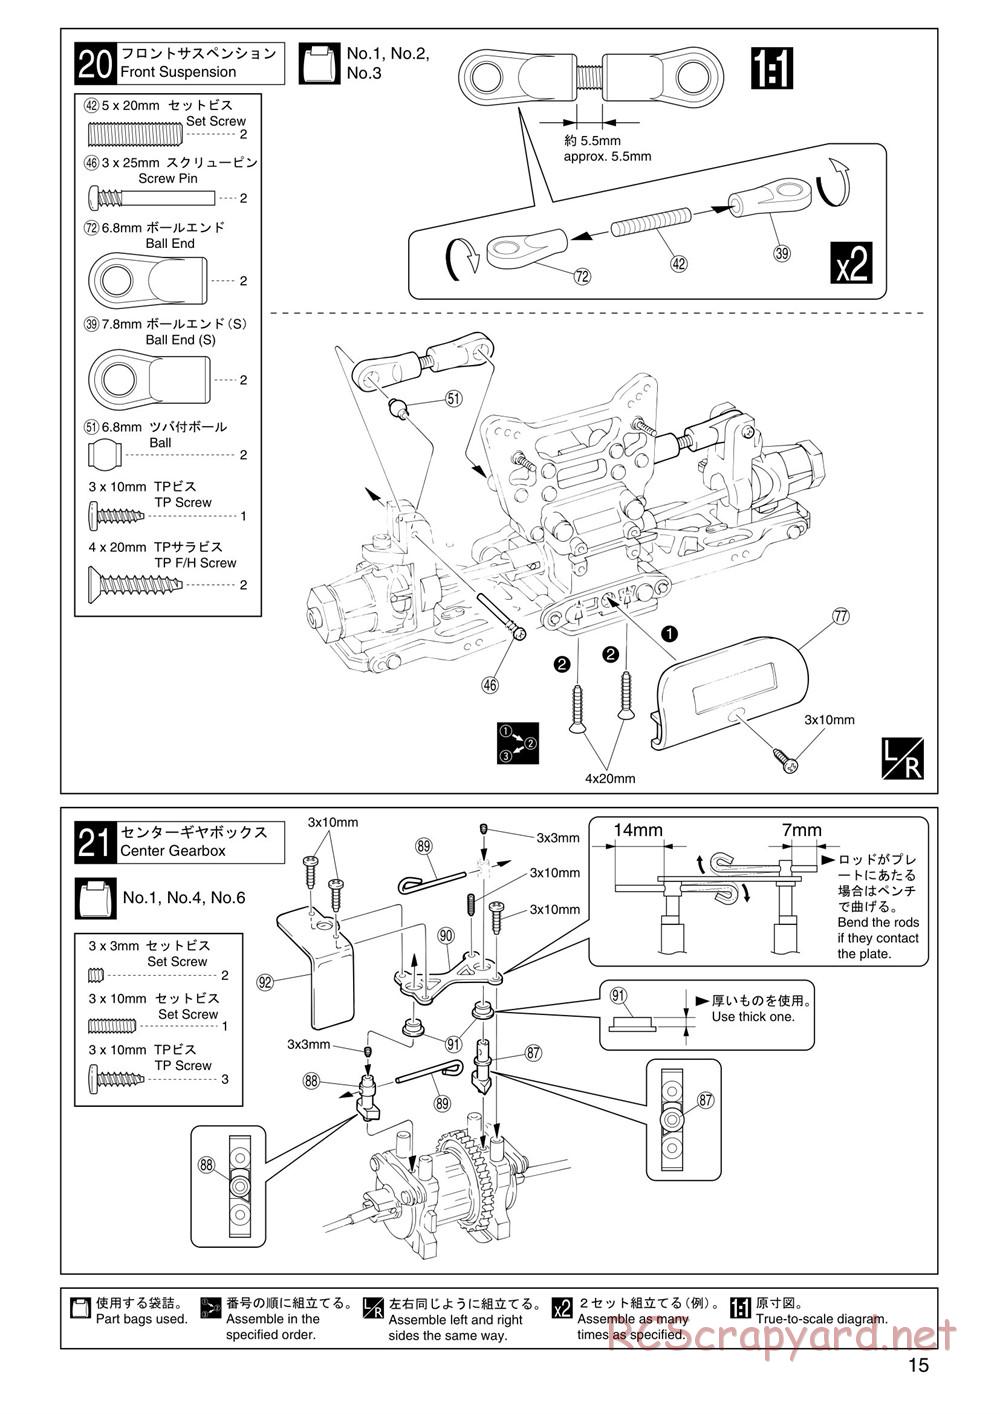 Kyosho - Super Eight GP20 Landmax 2 - Manual - Page 15